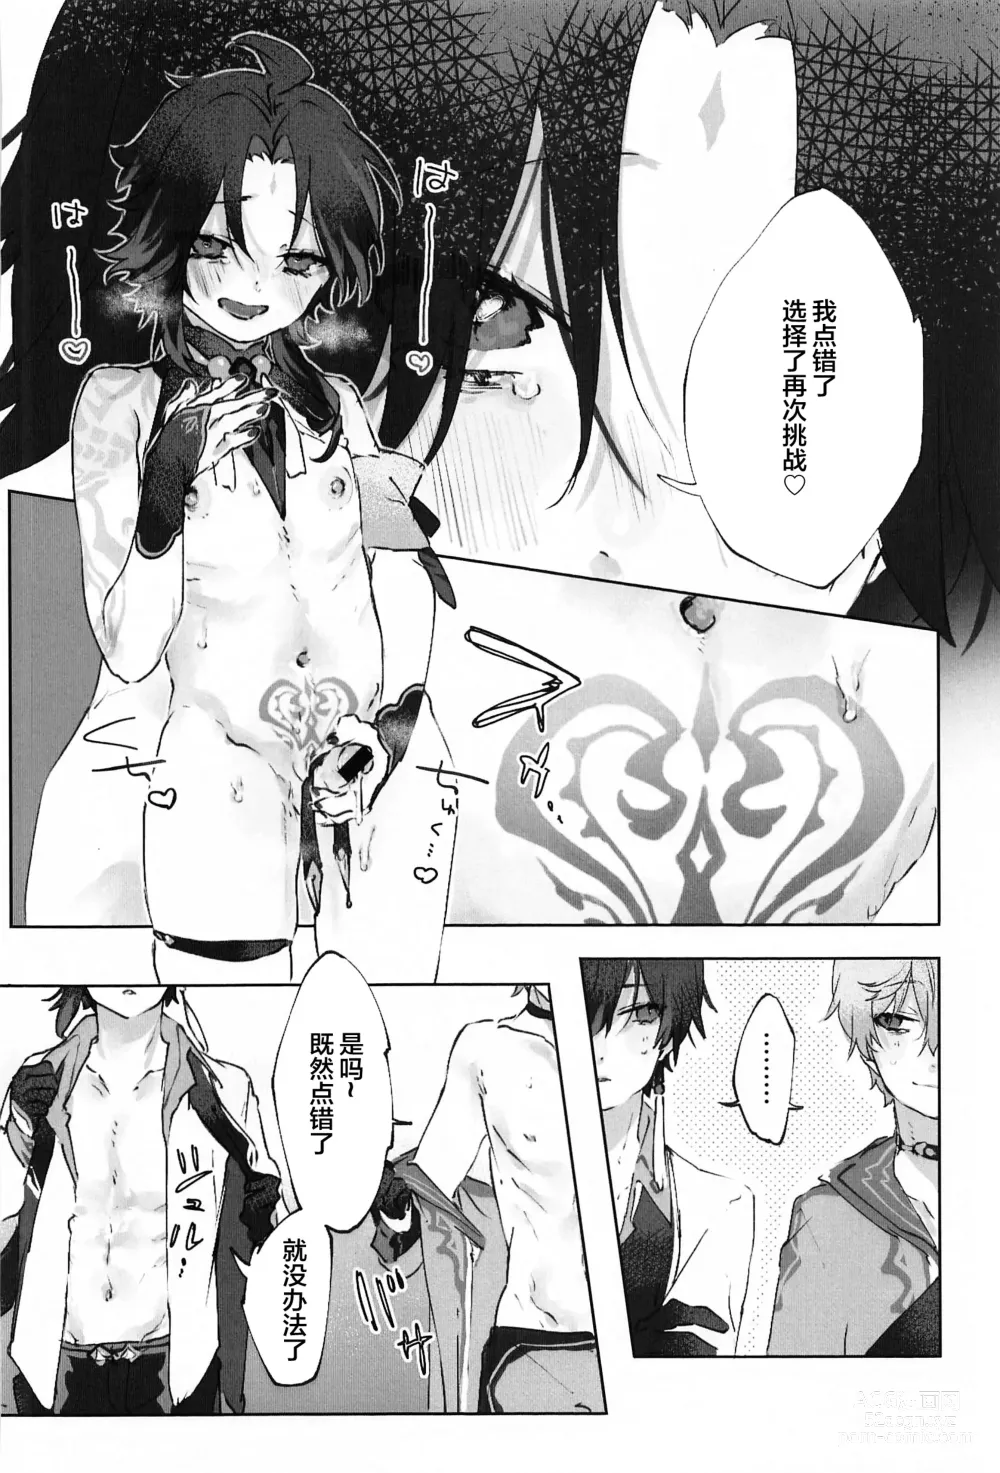 Page 46 of doujinshi Okawari.